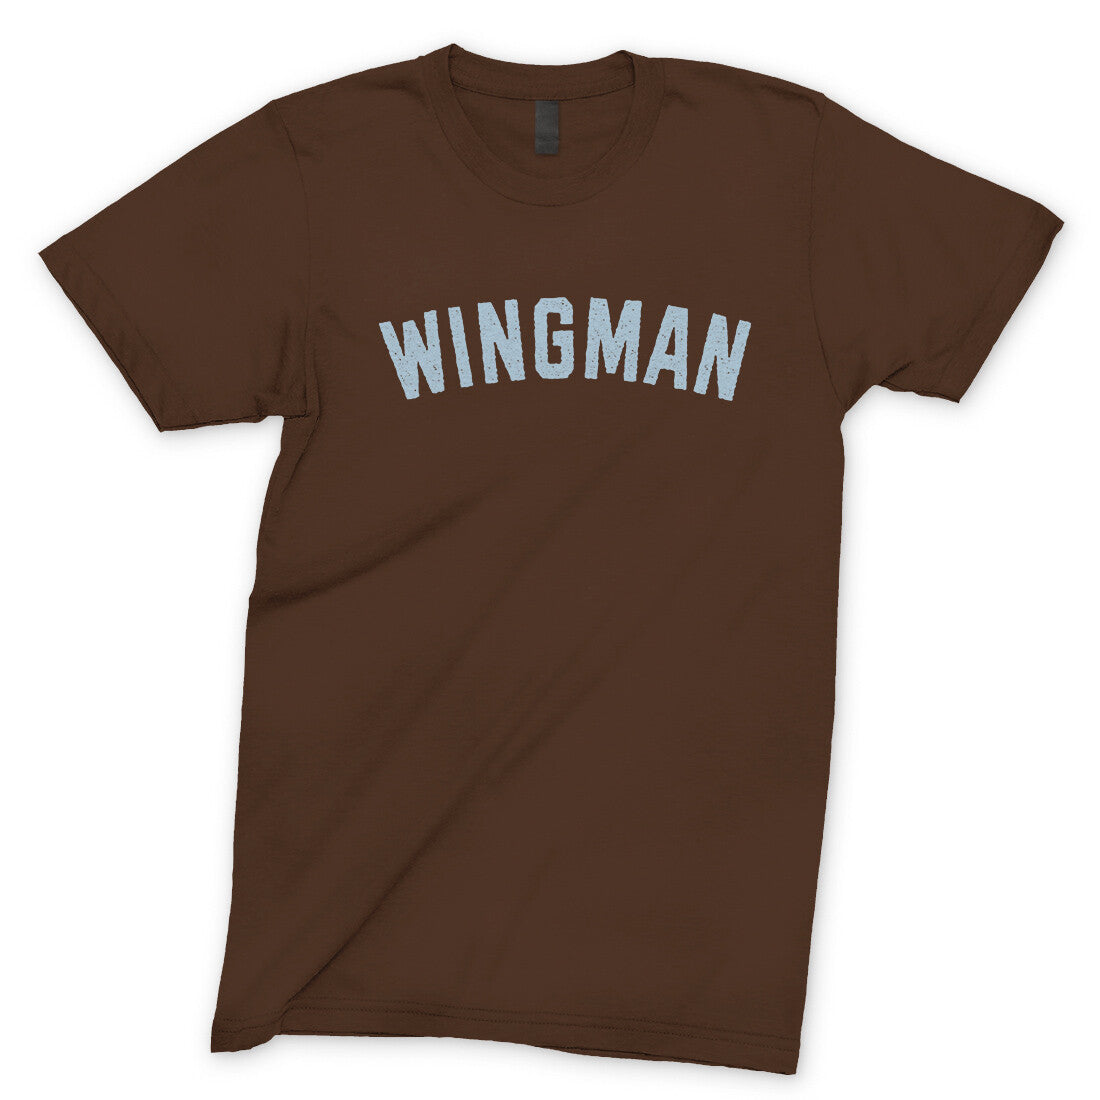 Wingman in Dark Chocolate Color